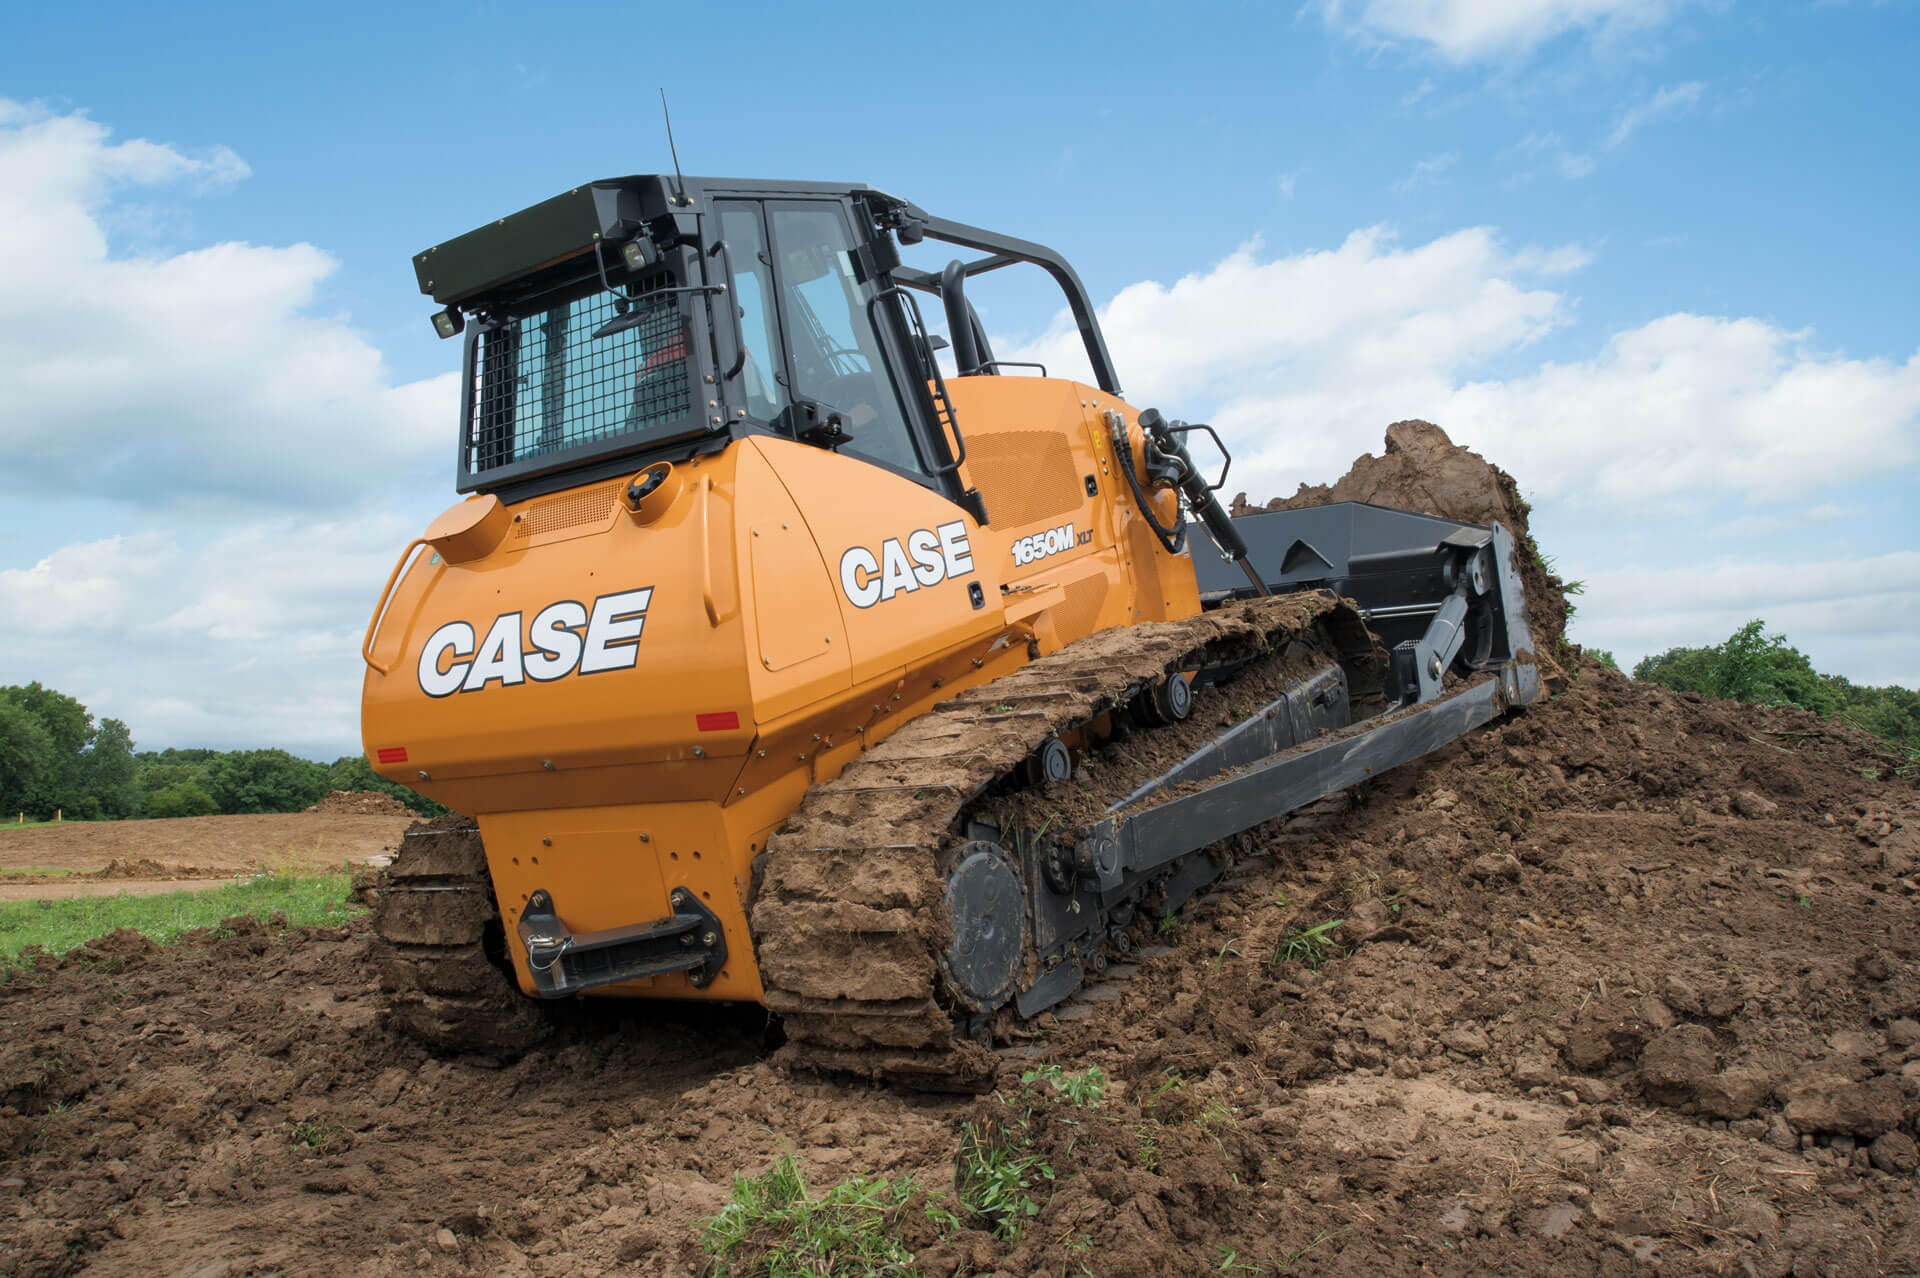 CASE Dozer Images | CASE Construction Equipment